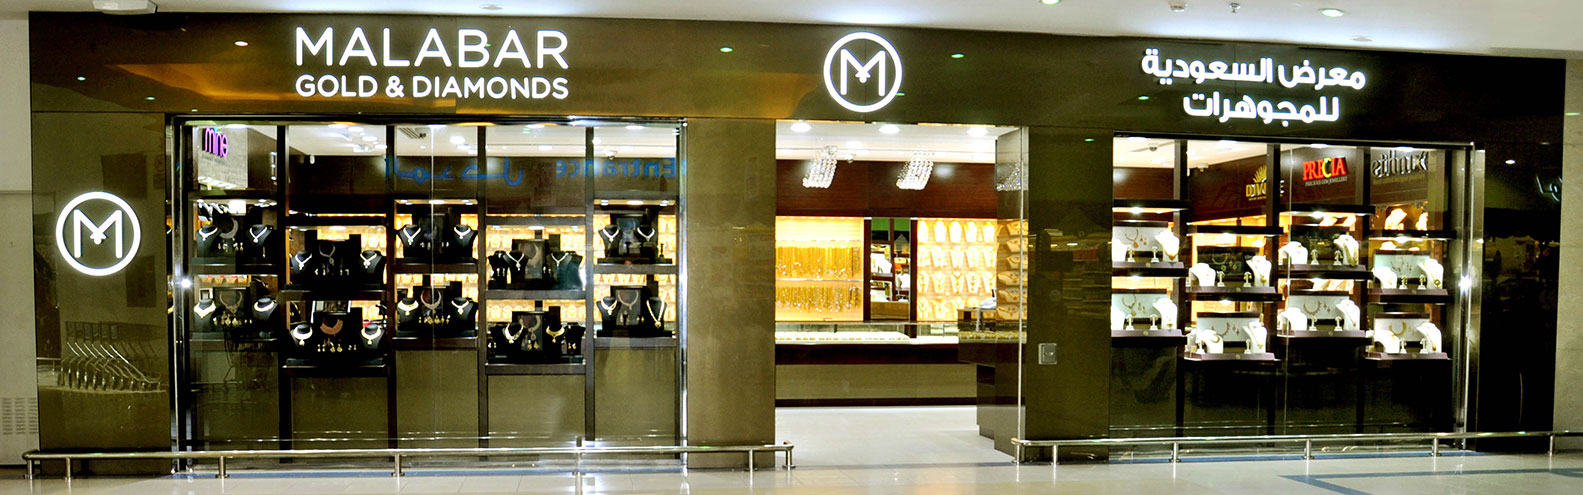 Malabar Gold & Diamonds Stores in Al Khobar, Saudi Arabia